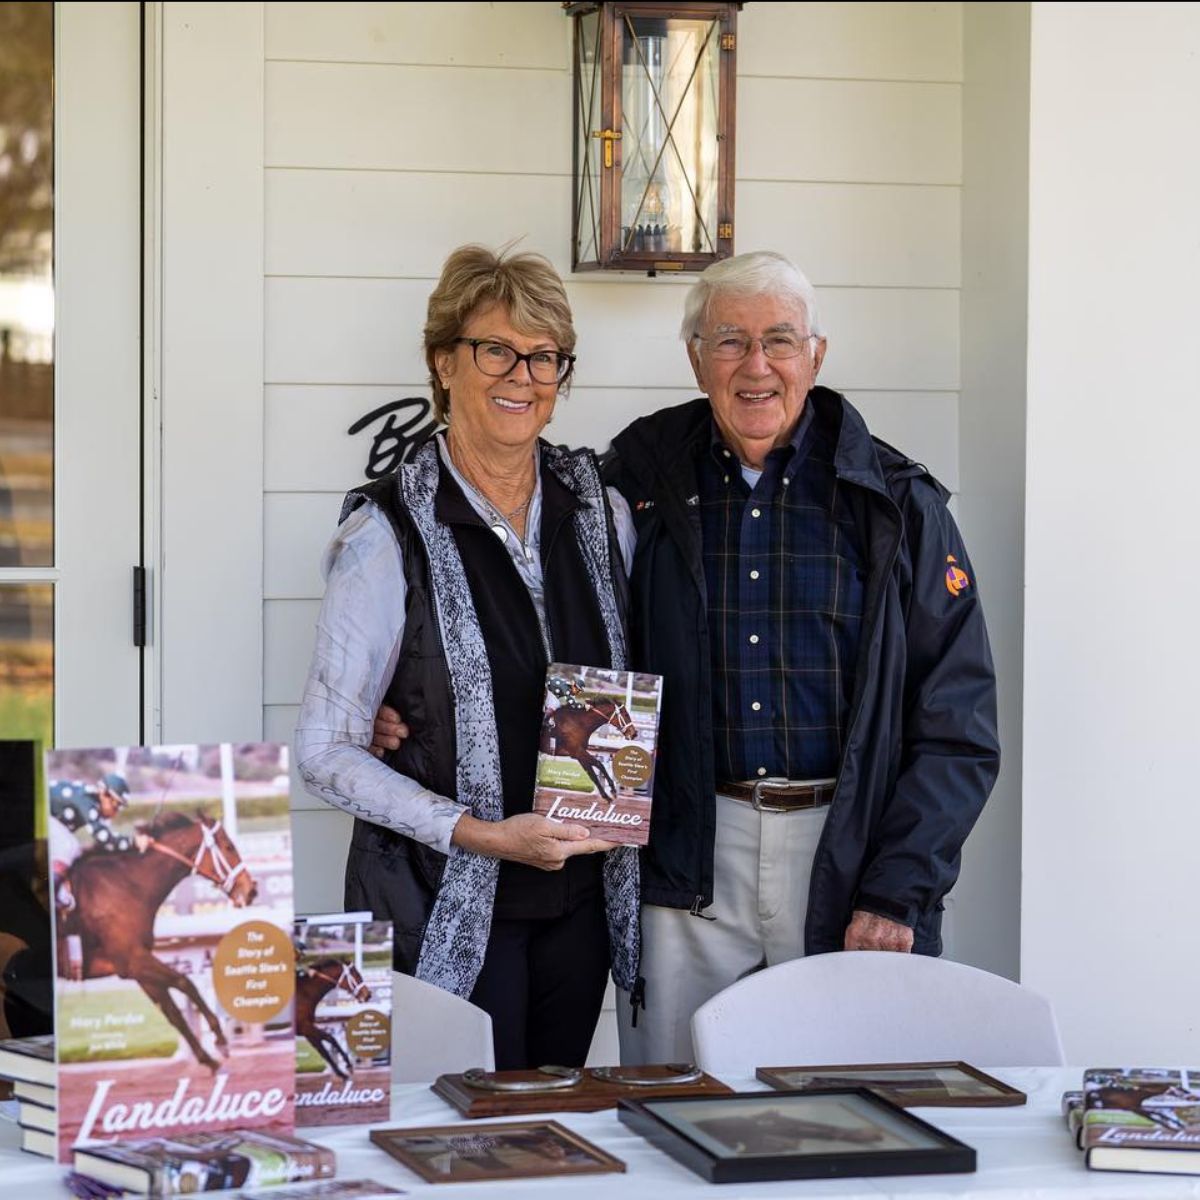 Mary Perdue & John Williams, Spendthrift Farm